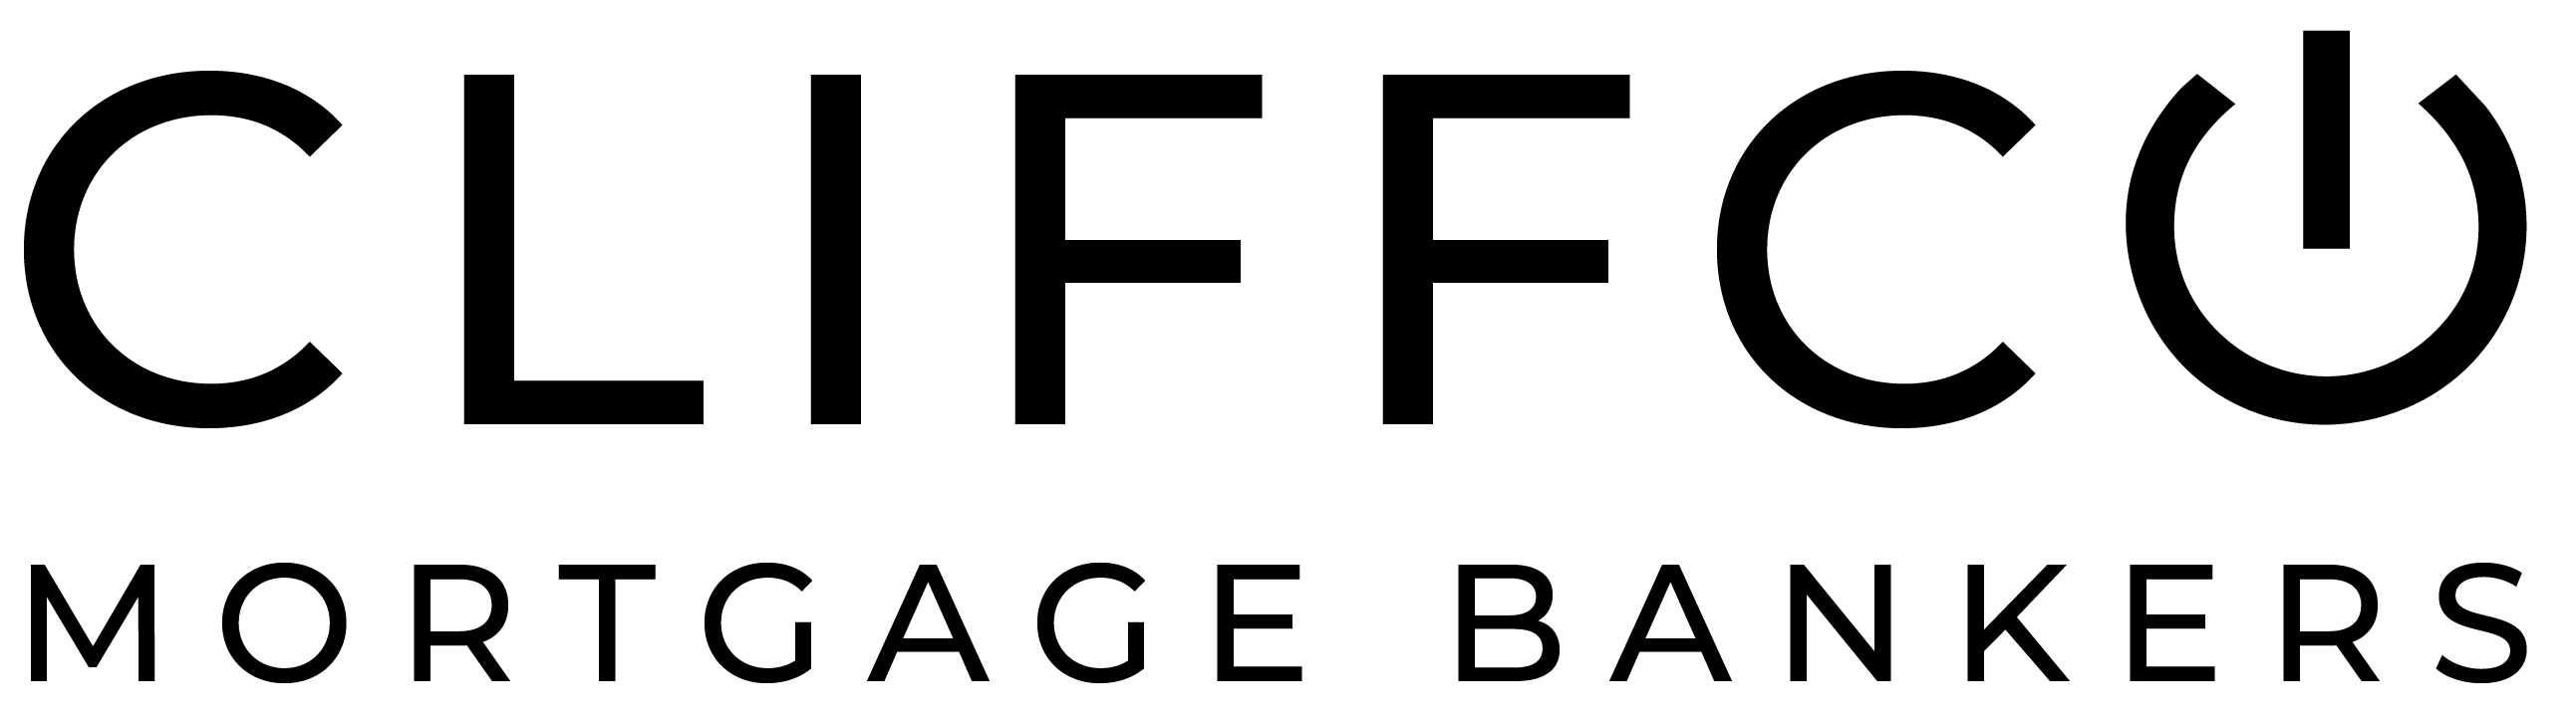 Michael Bisbee Logo